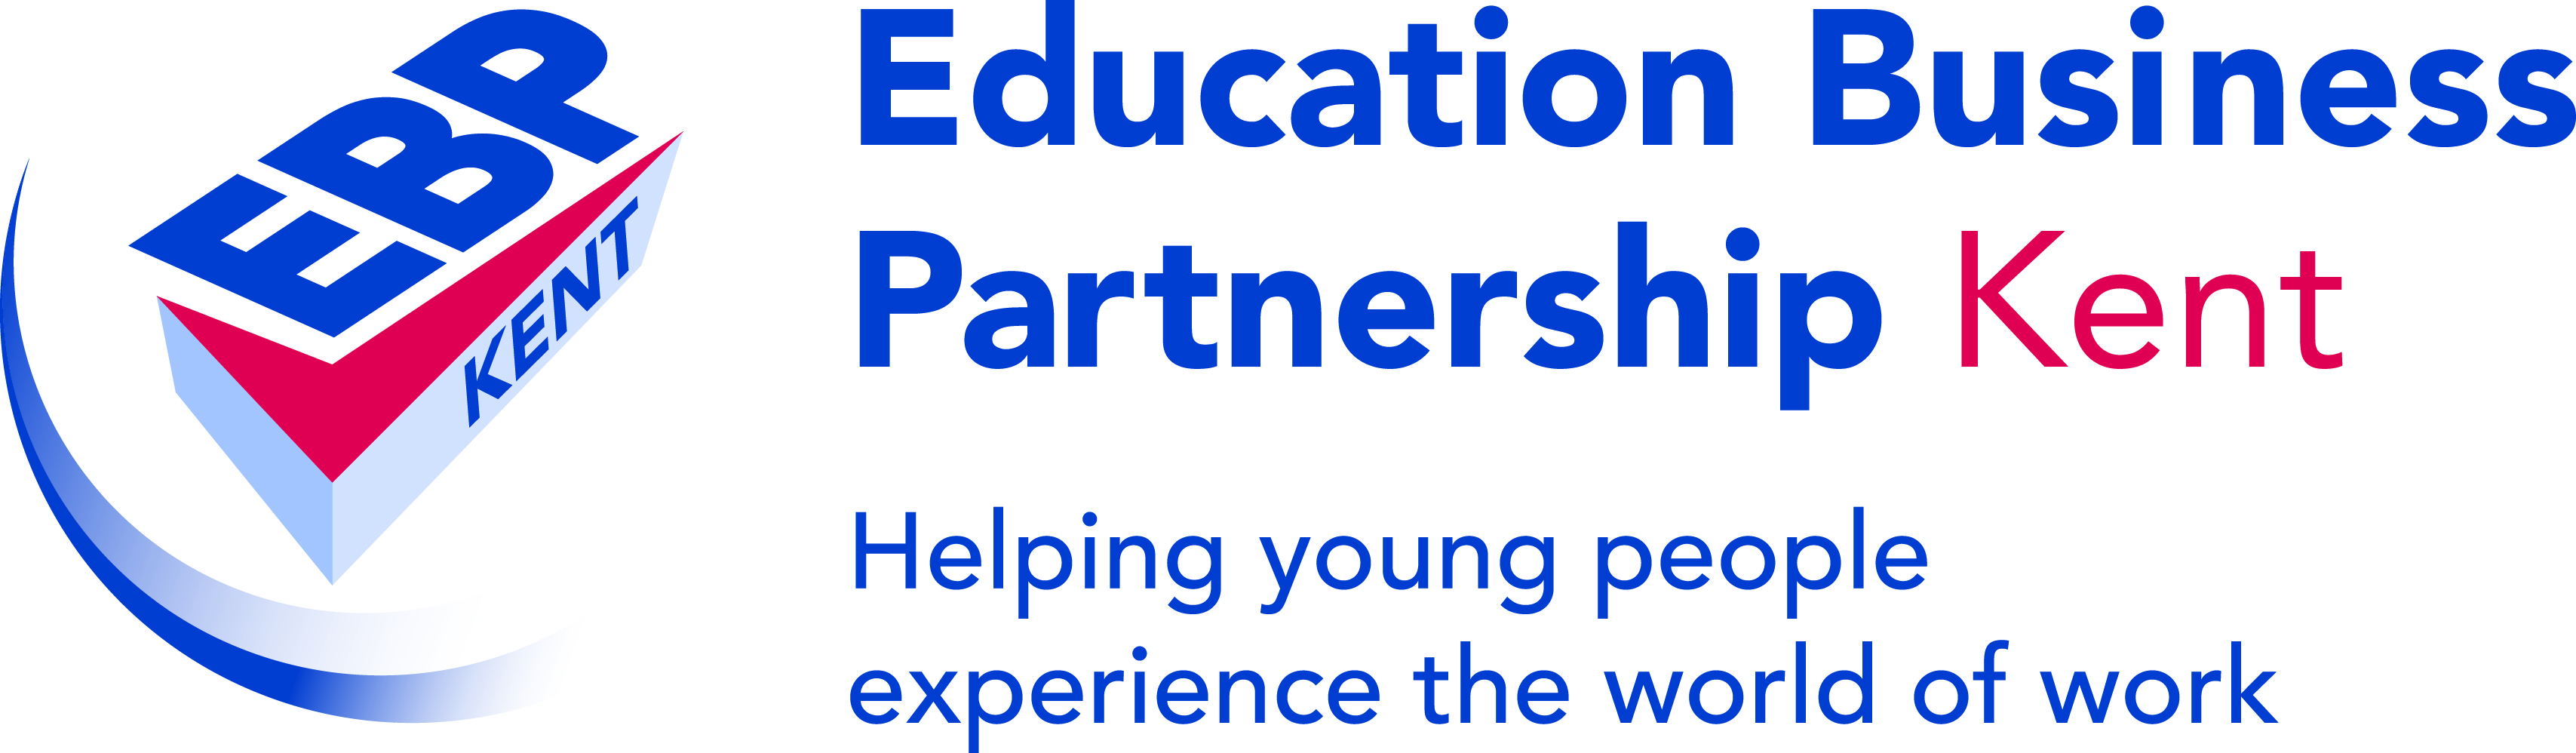 logo for Education Business Partnership Kent